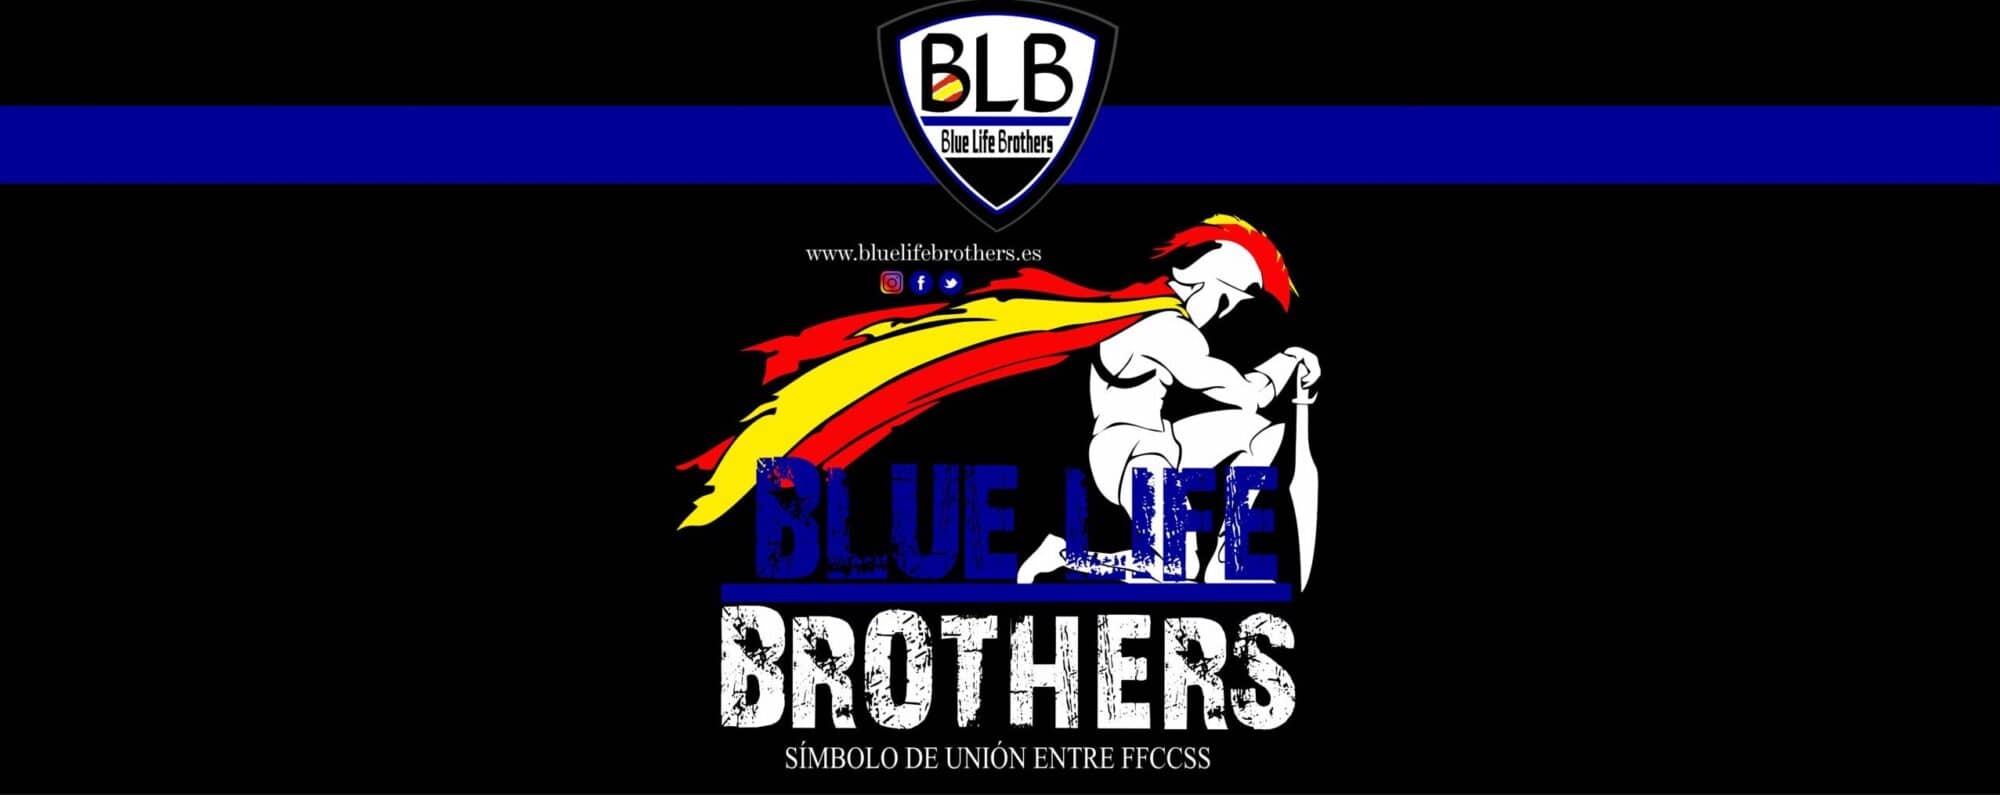 Blue Life Brothers, como símbolo de unión entre Policías.